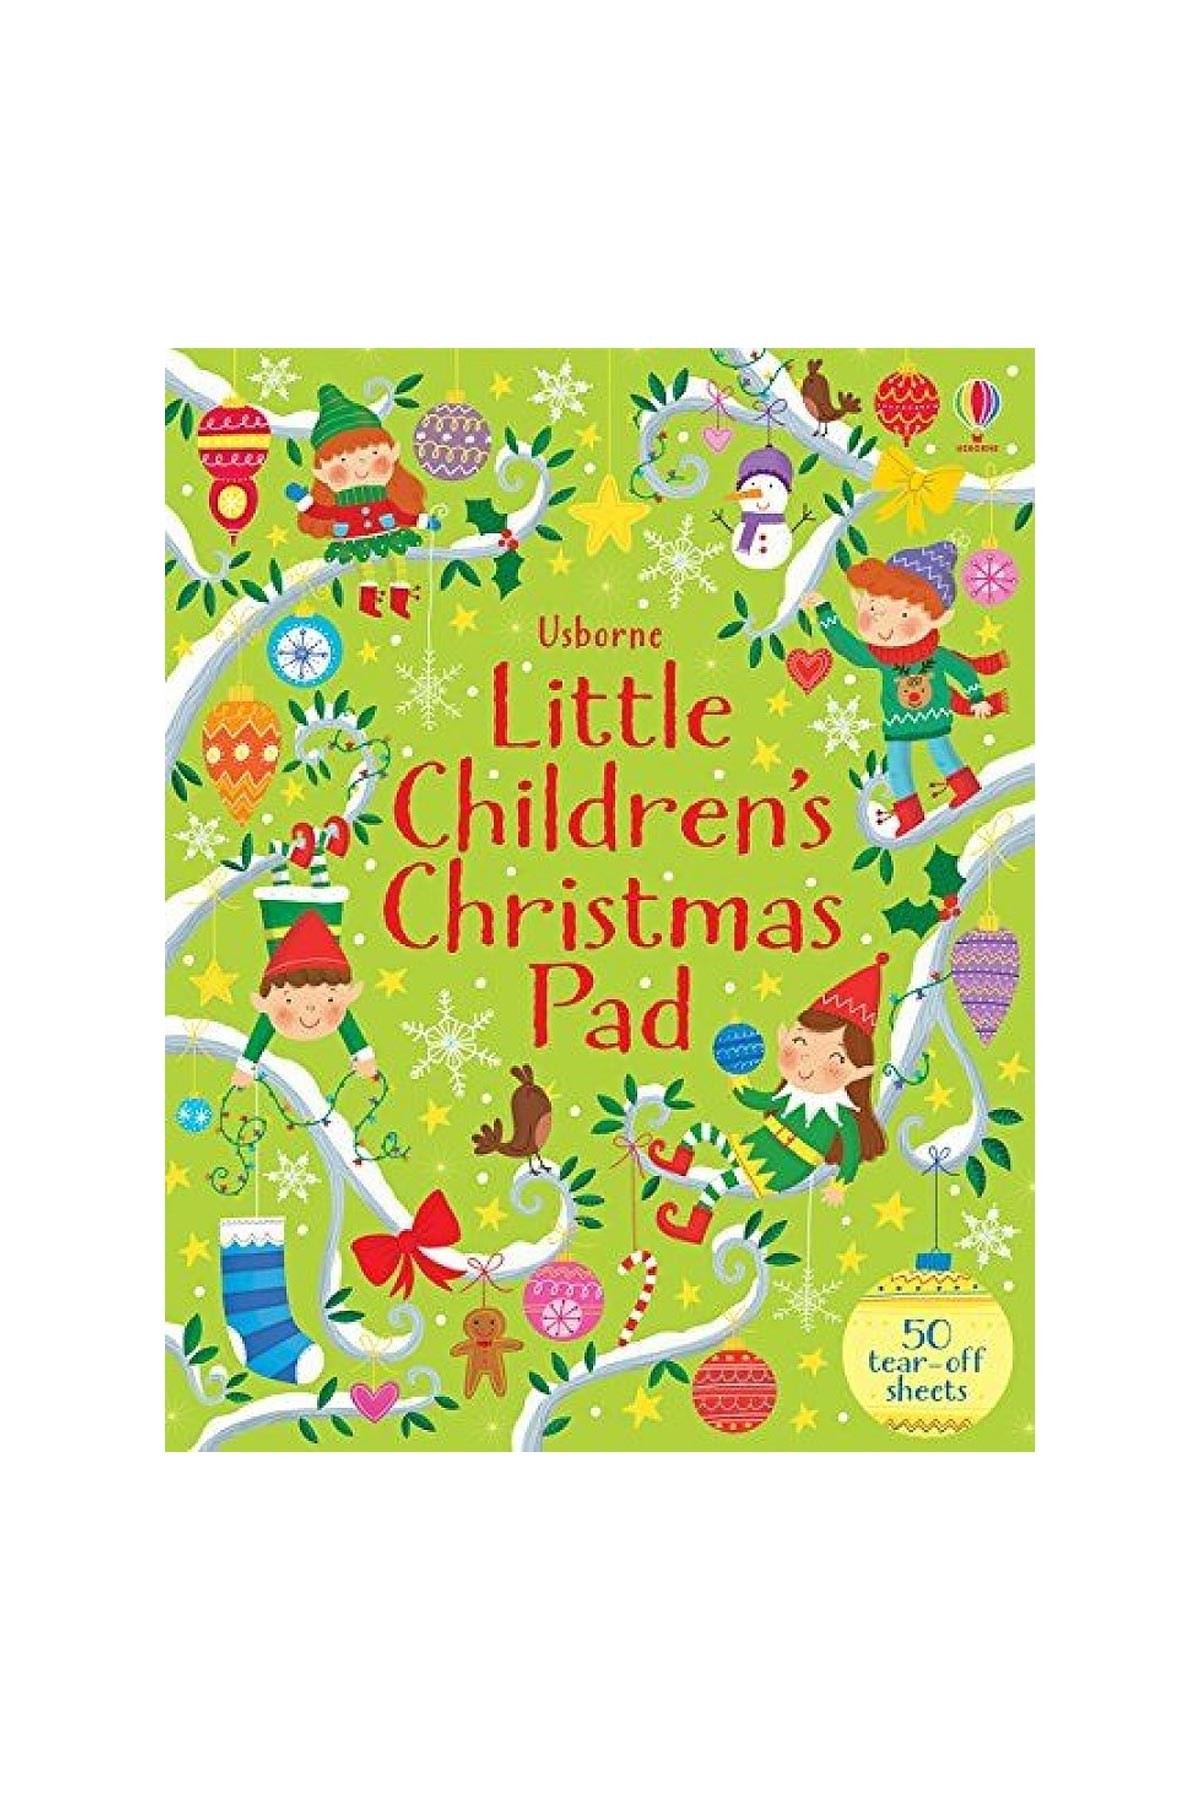 The Usborne Little Children's Christmas Pad